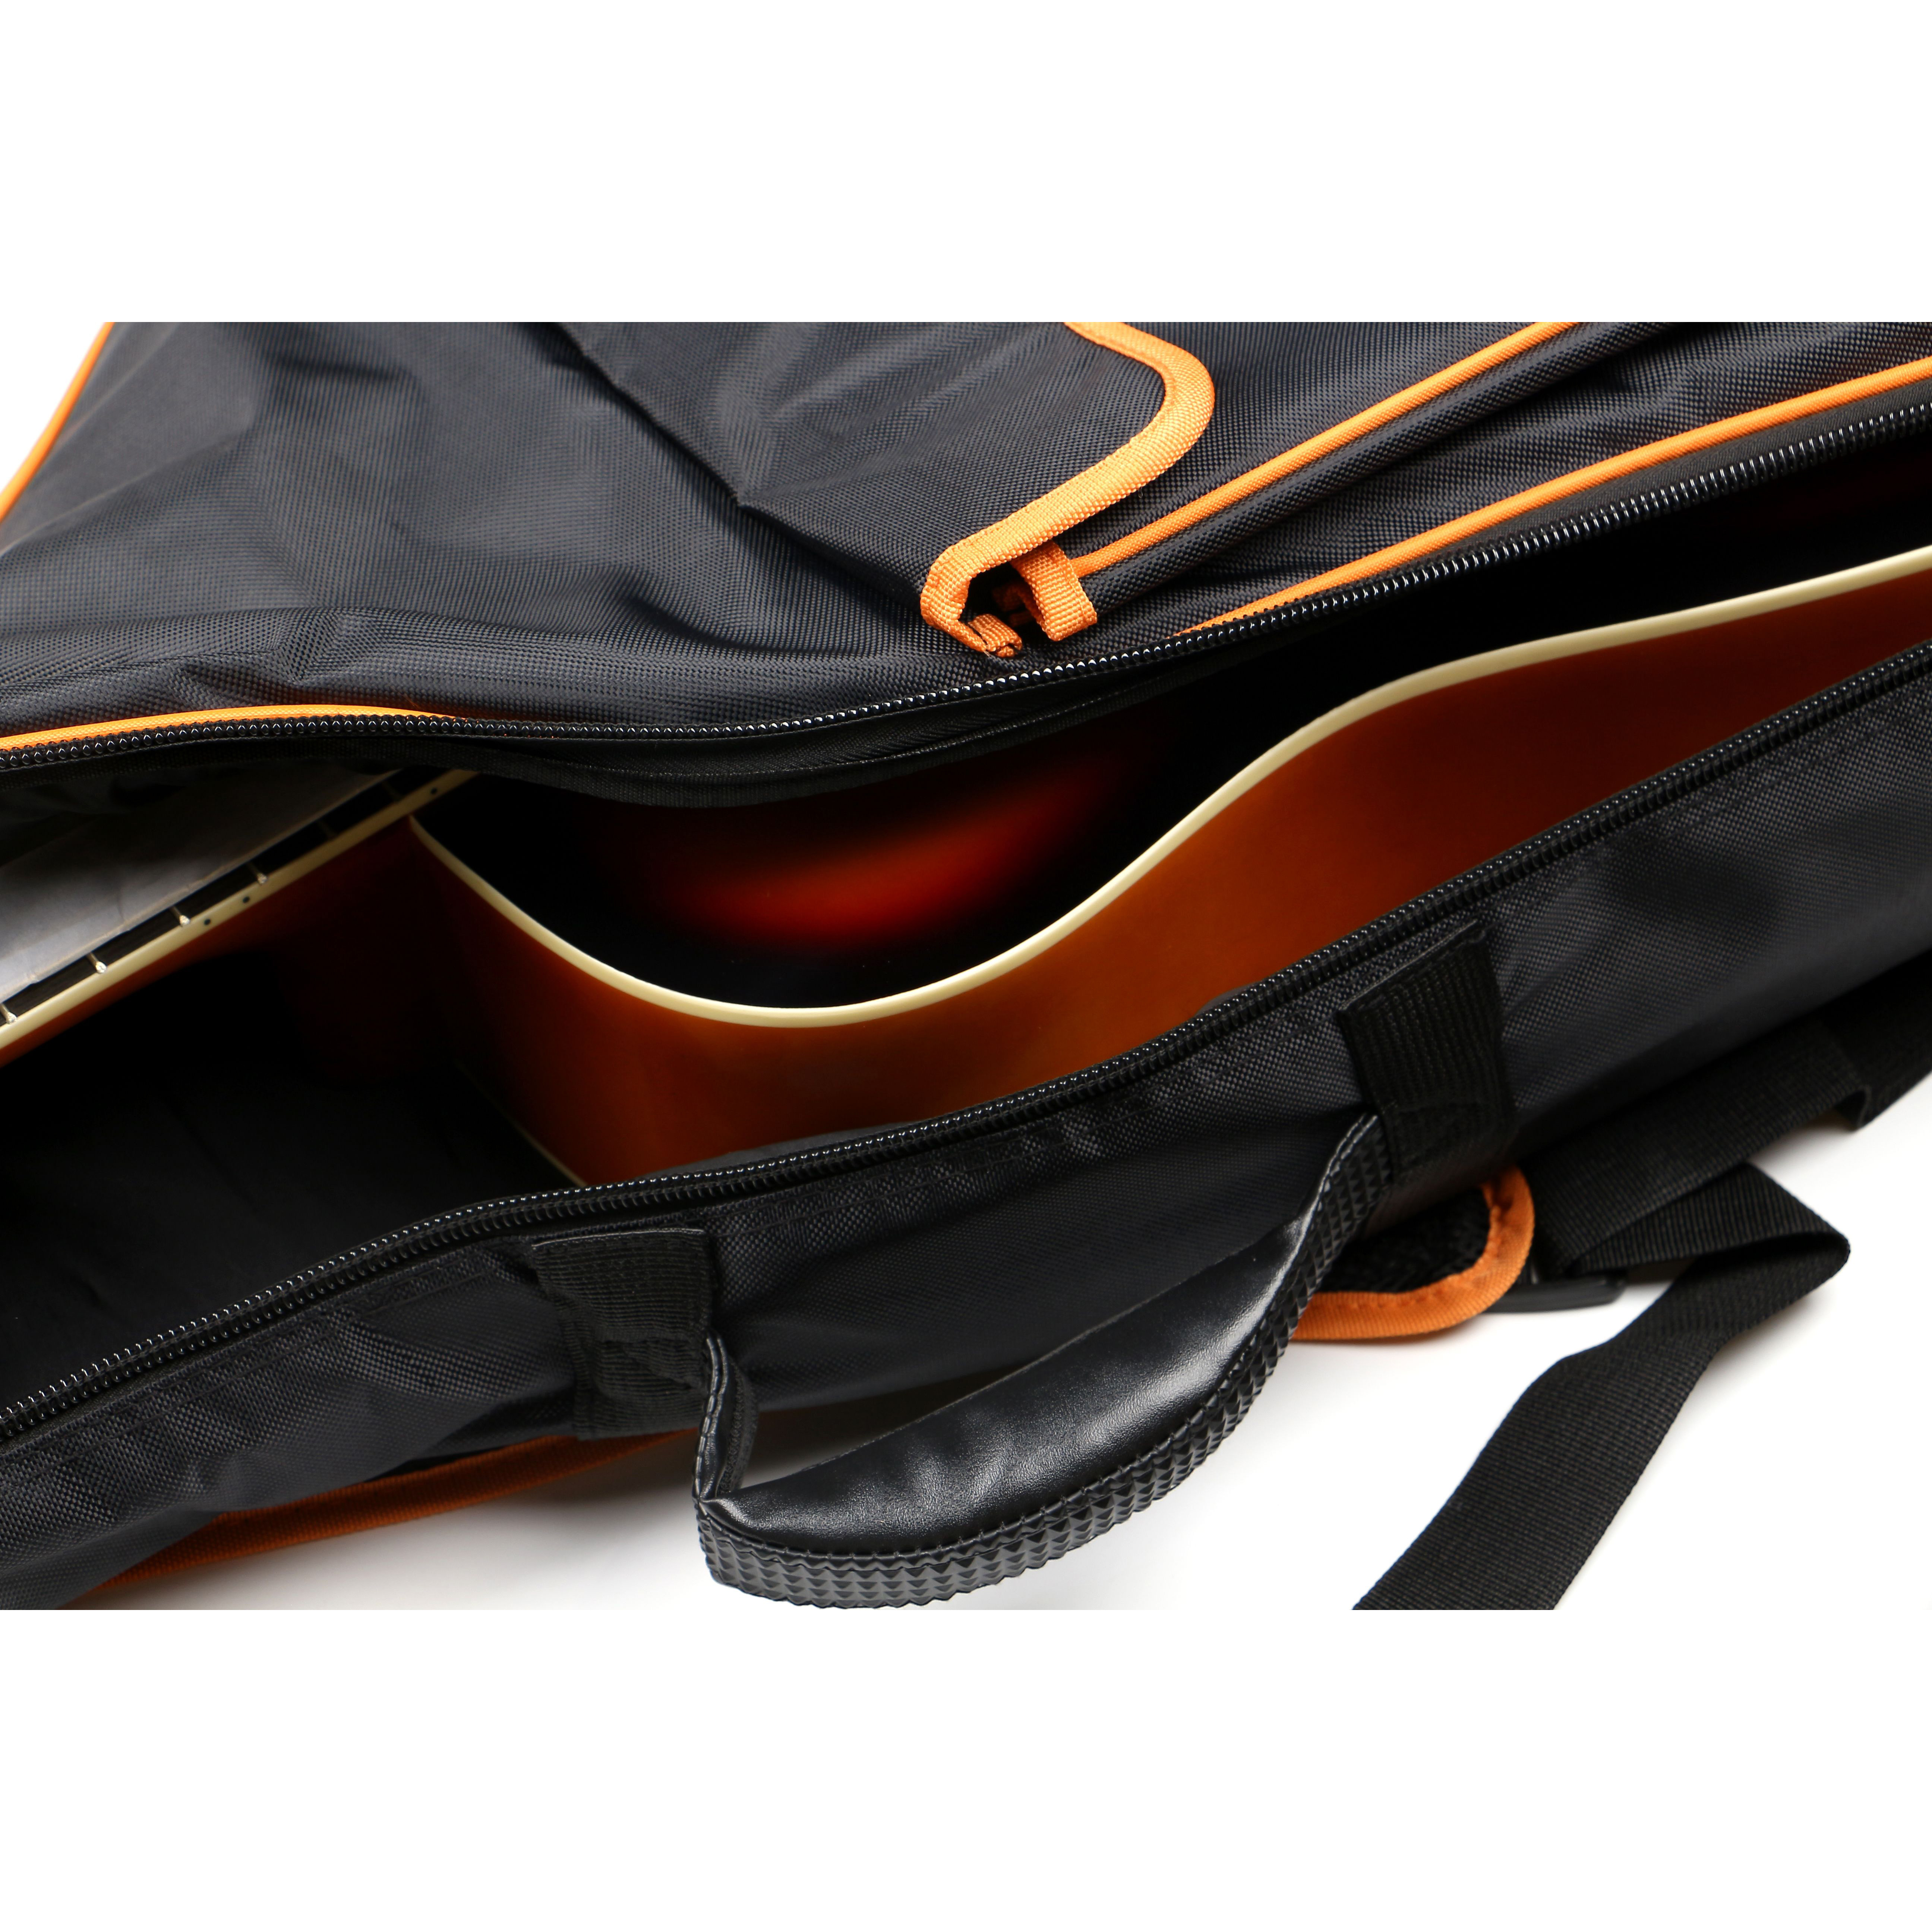 Sevillia covers GB-UD41-R Оборудование гитарное